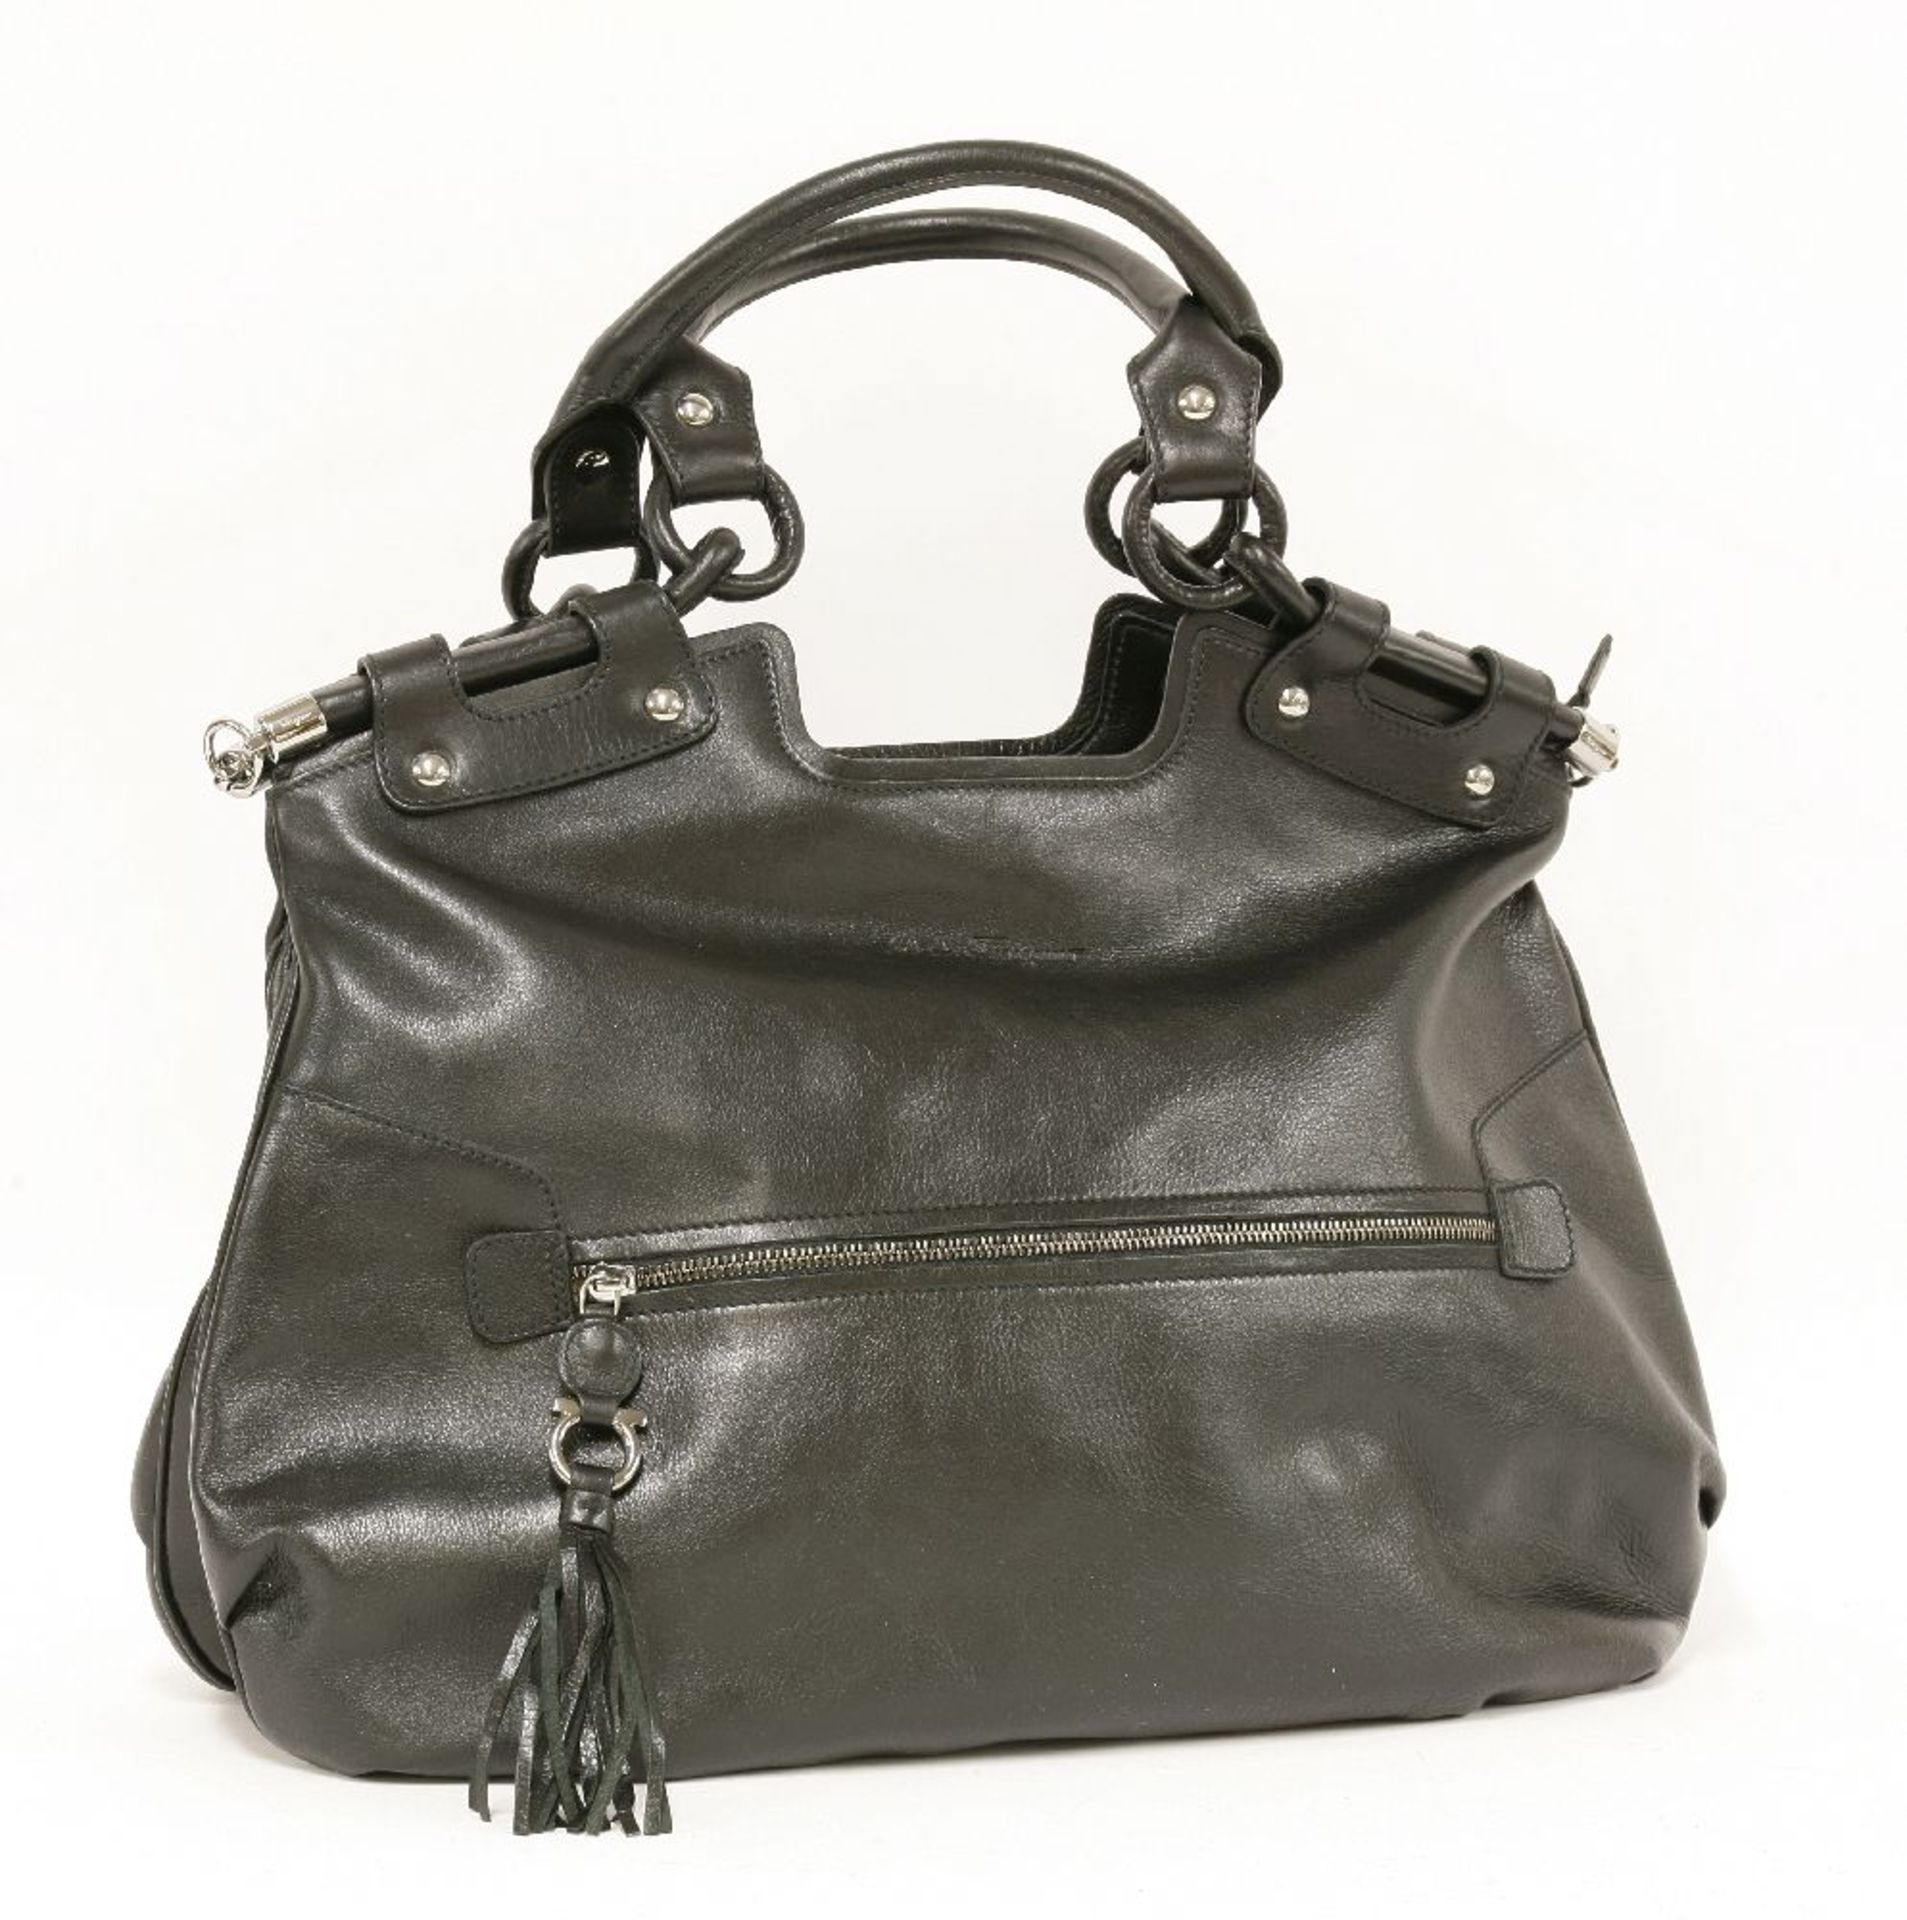 A Salvatore Ferragamo black leather large tote handbag,embossed logo and exterior zip pocket, double